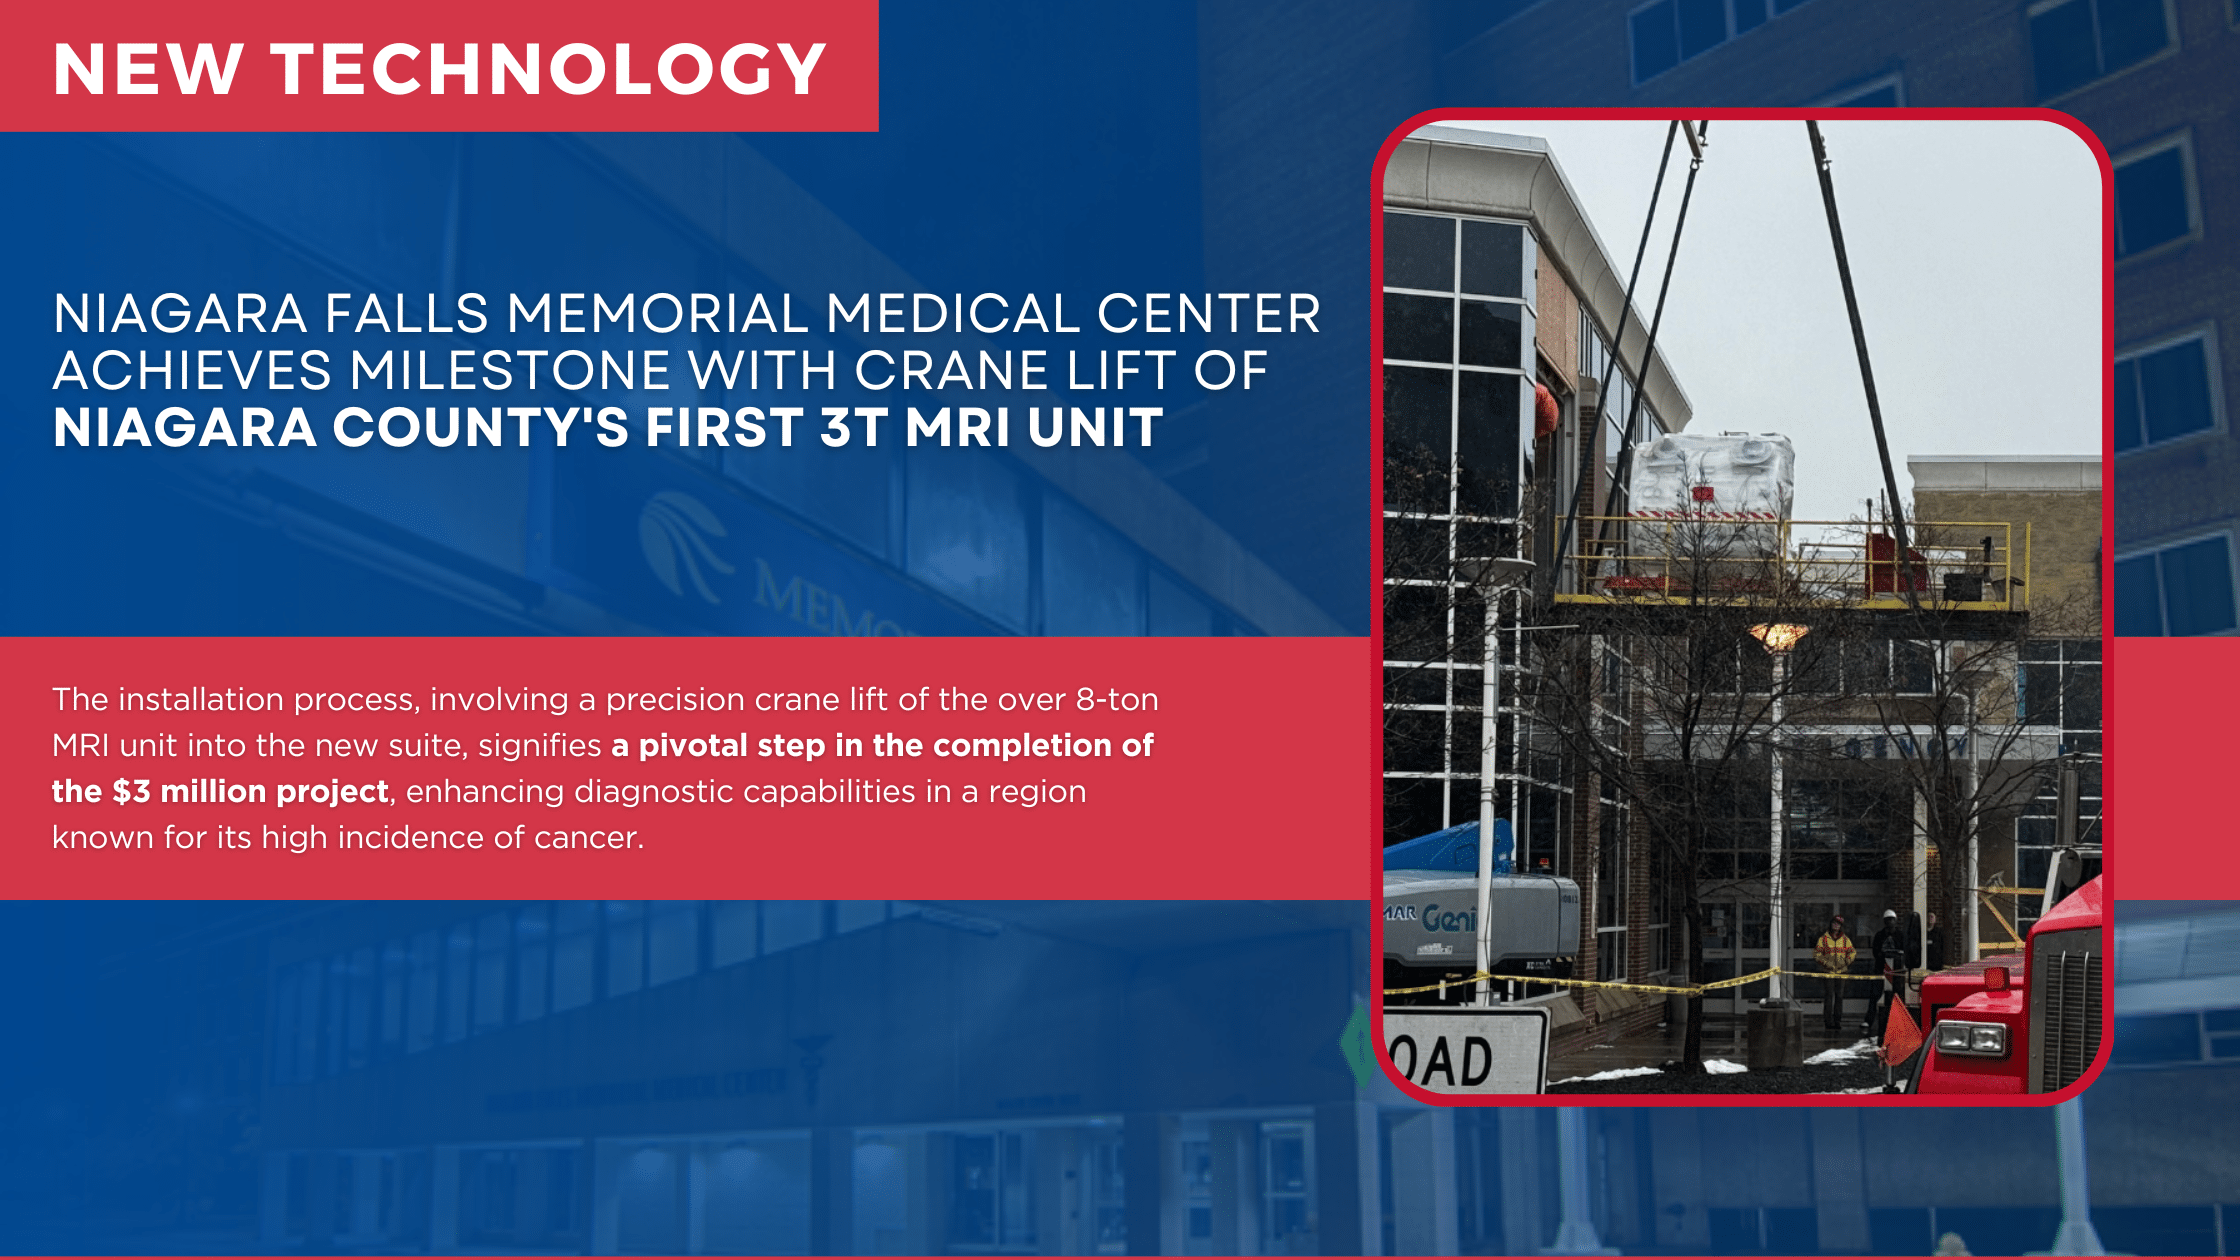 Niagara Falls Memorial Medical Center Achieves Milestone with Crane Lift of Niagara County’s First 3T MRI Unit